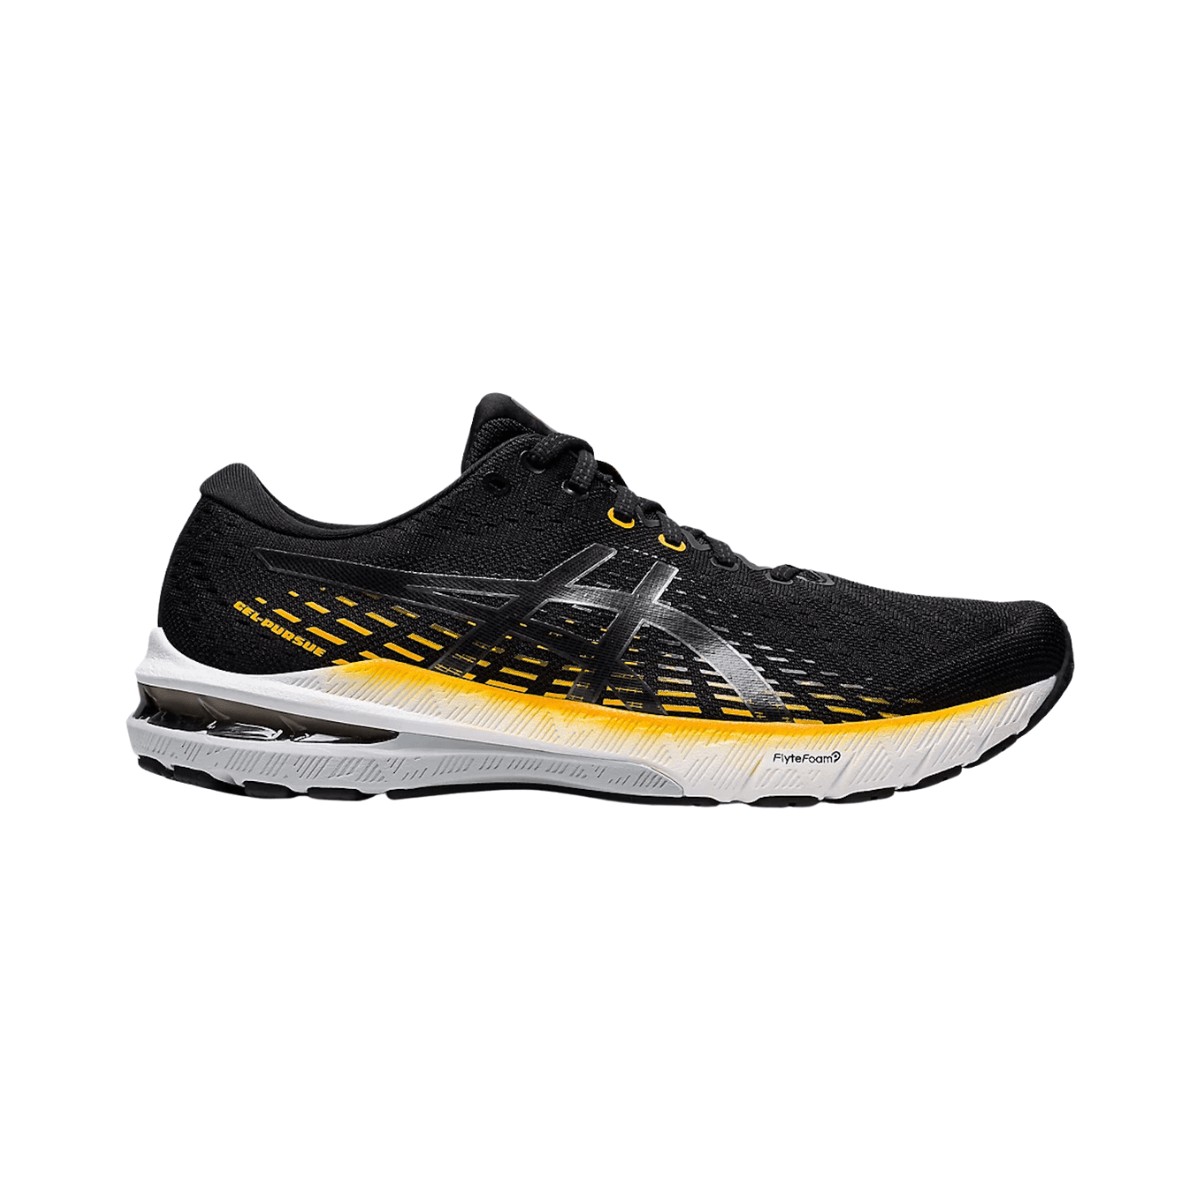 Asics Gel Pursue 8 Running Shoes Black Yellow| The best price